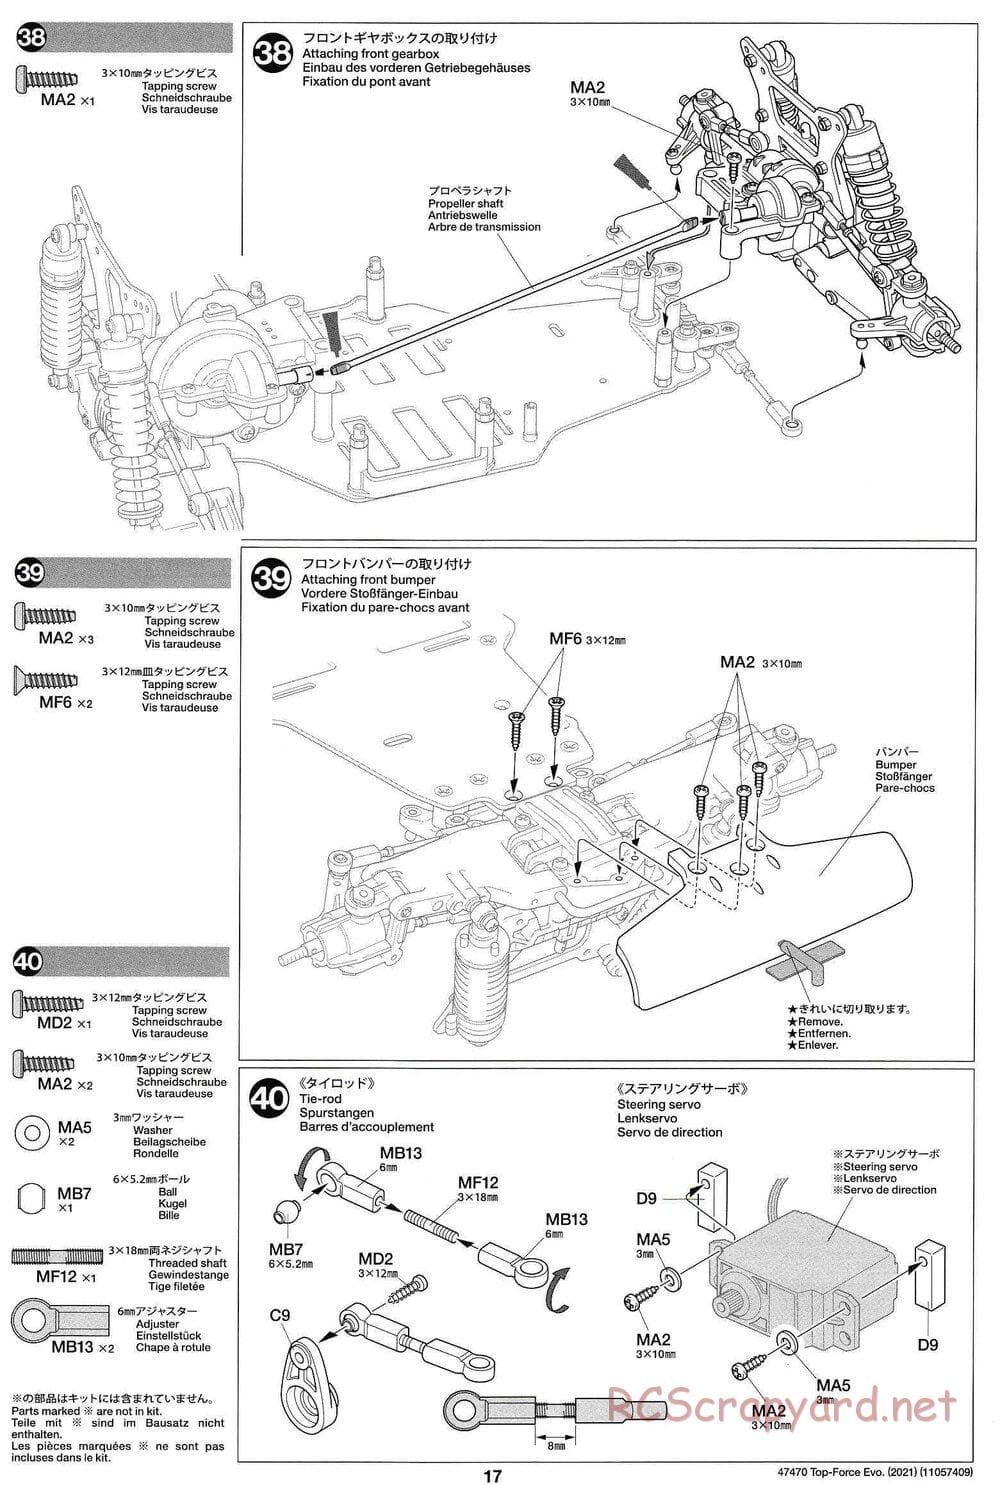 Tamiya - Top Force Evo 2021 - DF-01 Chassis - Manual - Page 17